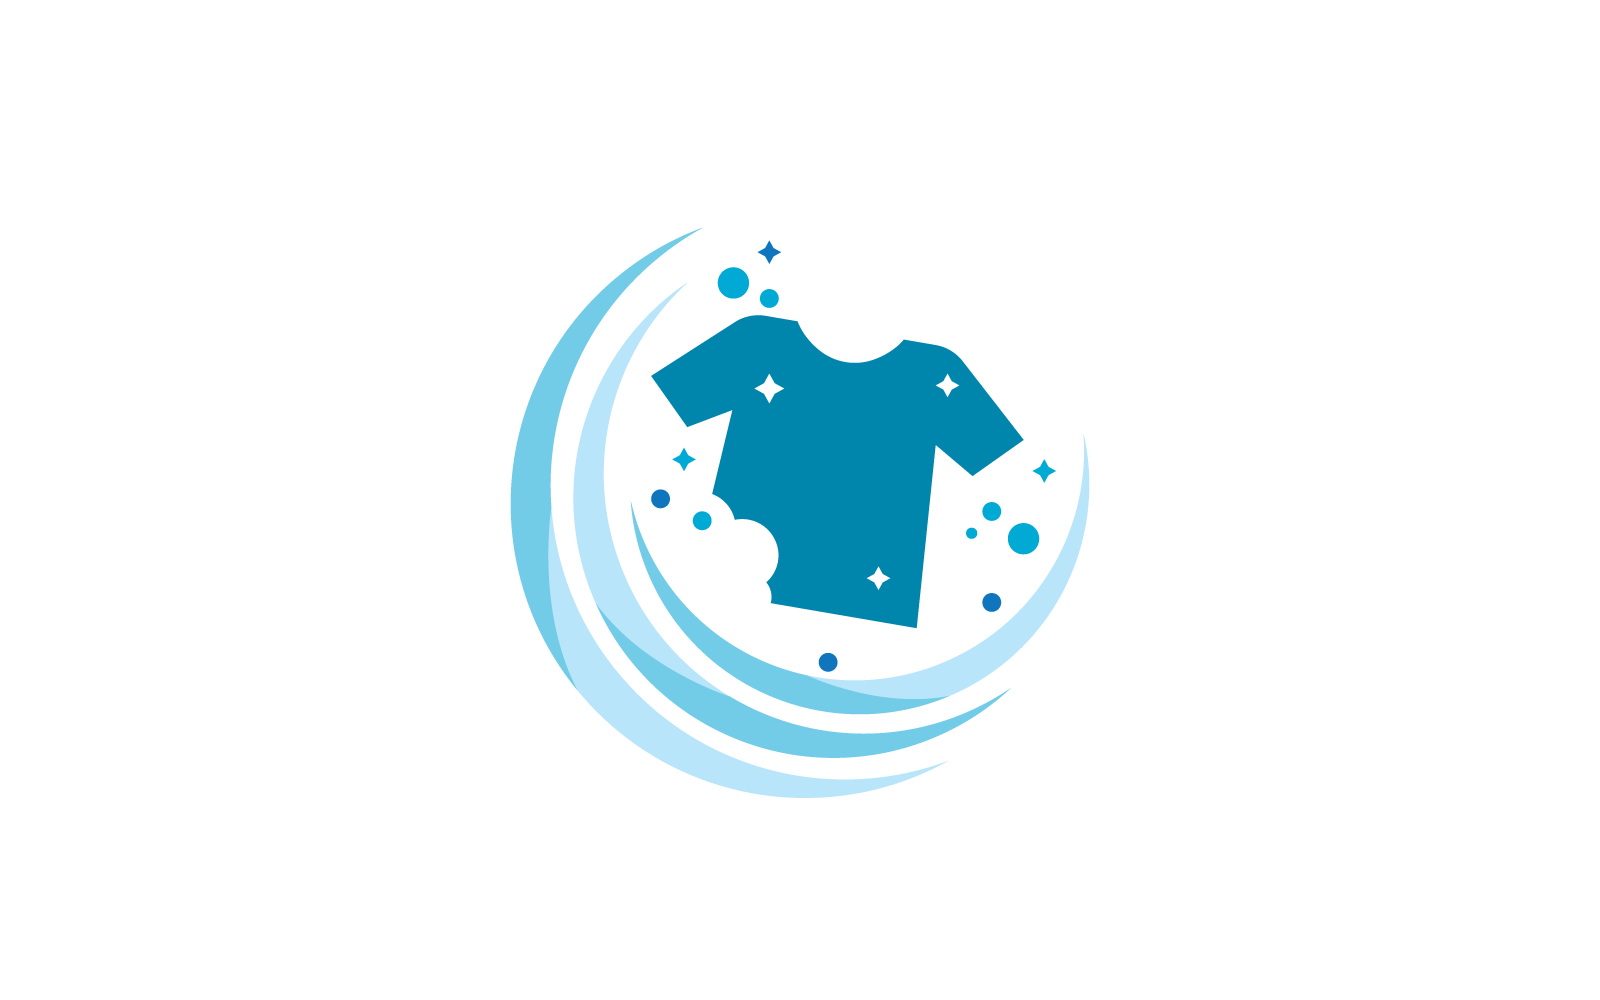 Laundry logo design vector illustration template